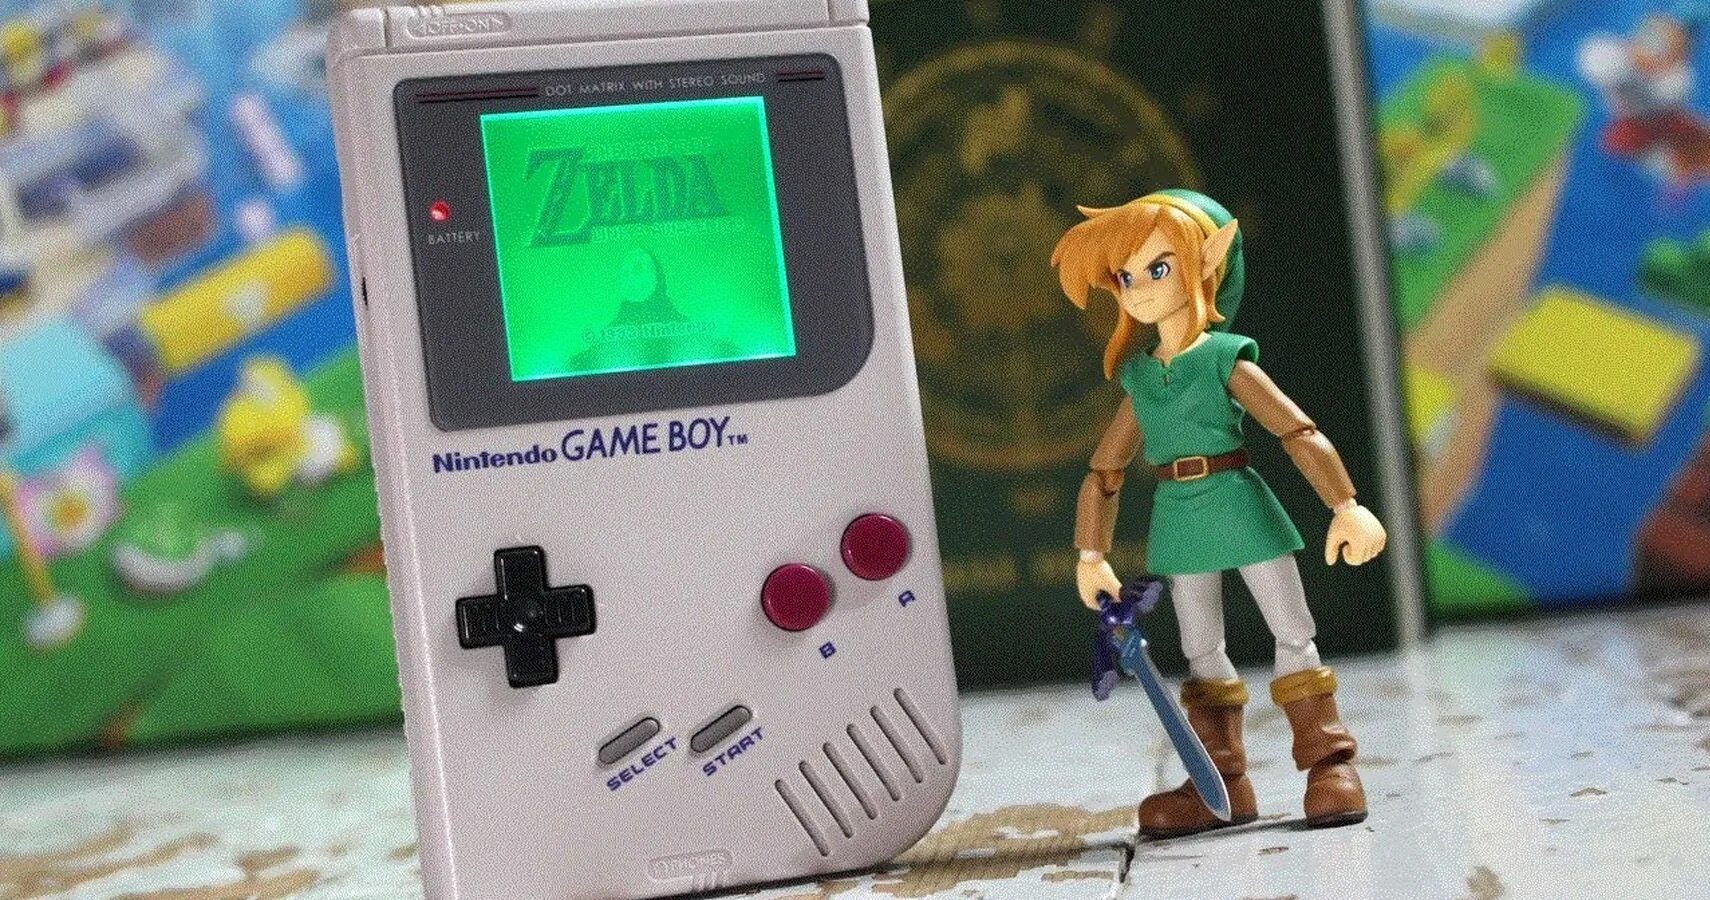 Nintendo link. The Legend of Zelda игра Nintendo. Зельда игра на Нинтендо. Nintendo Zelda приставка. Линк Зельда Нинтендо.